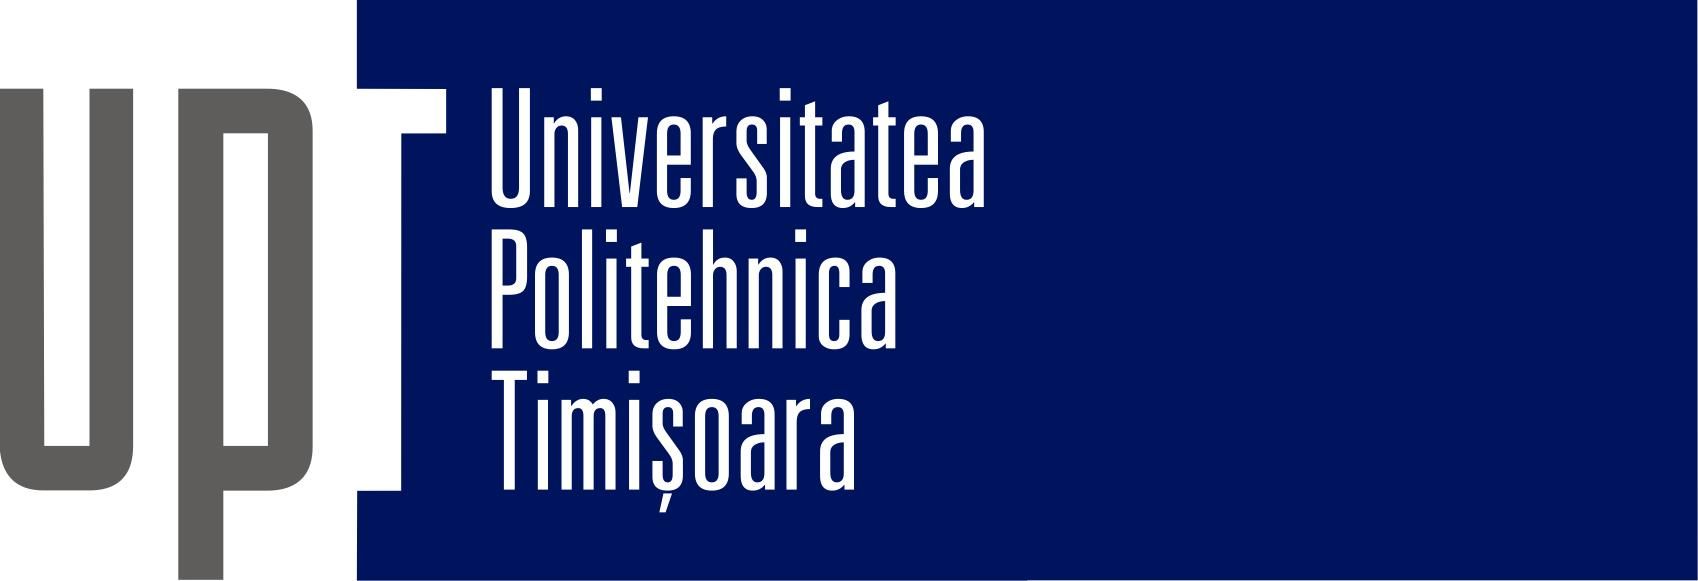 Universitatea politechnica Timisoara